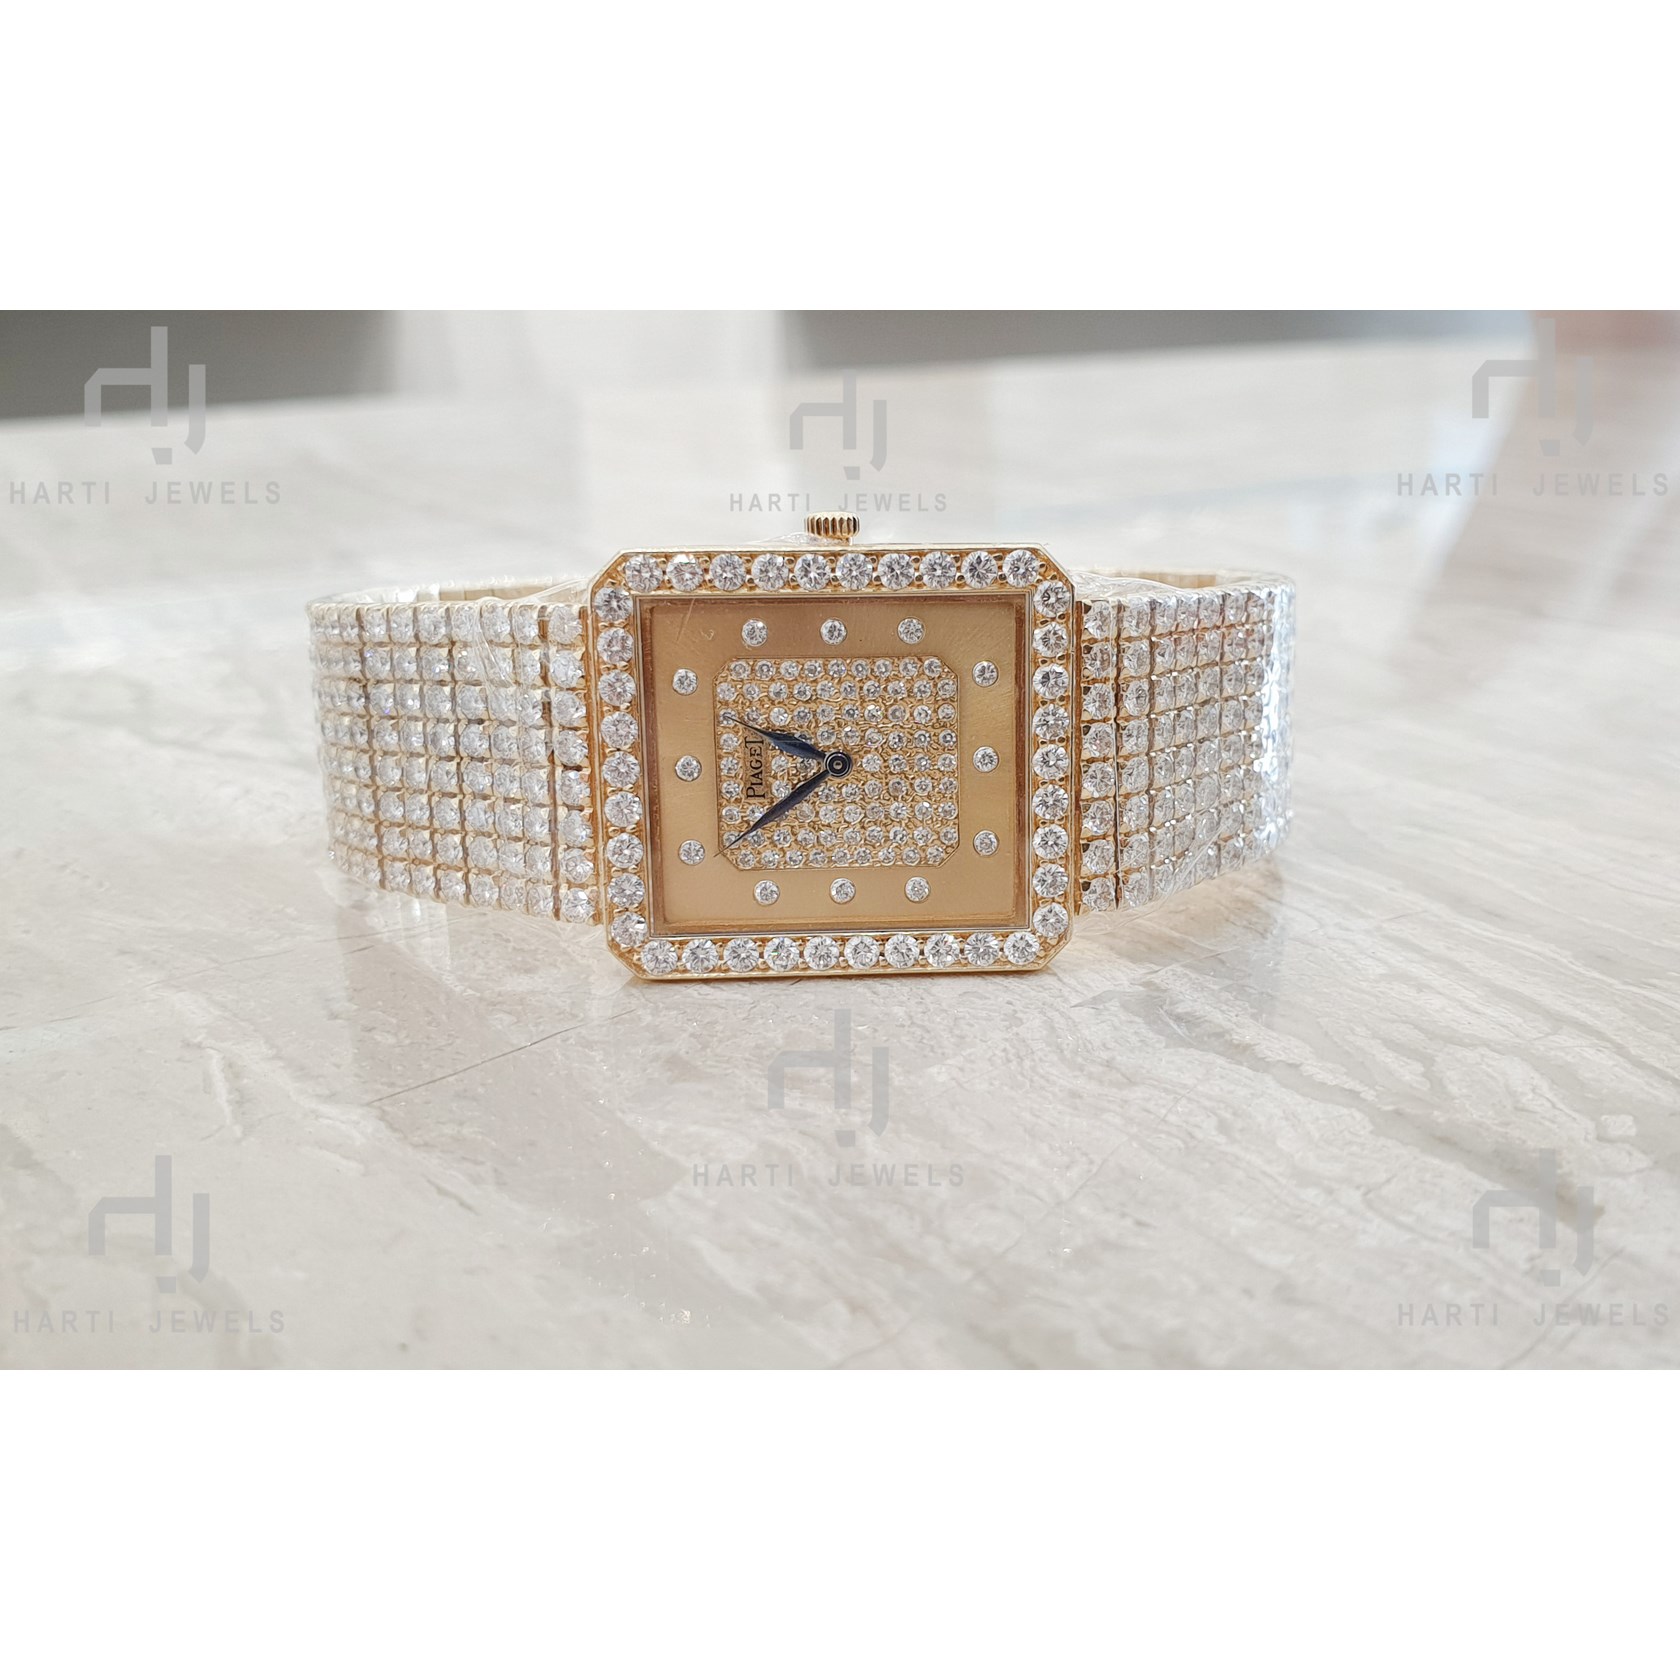 Piaget Ladies Vintage Watch - Full Diamond